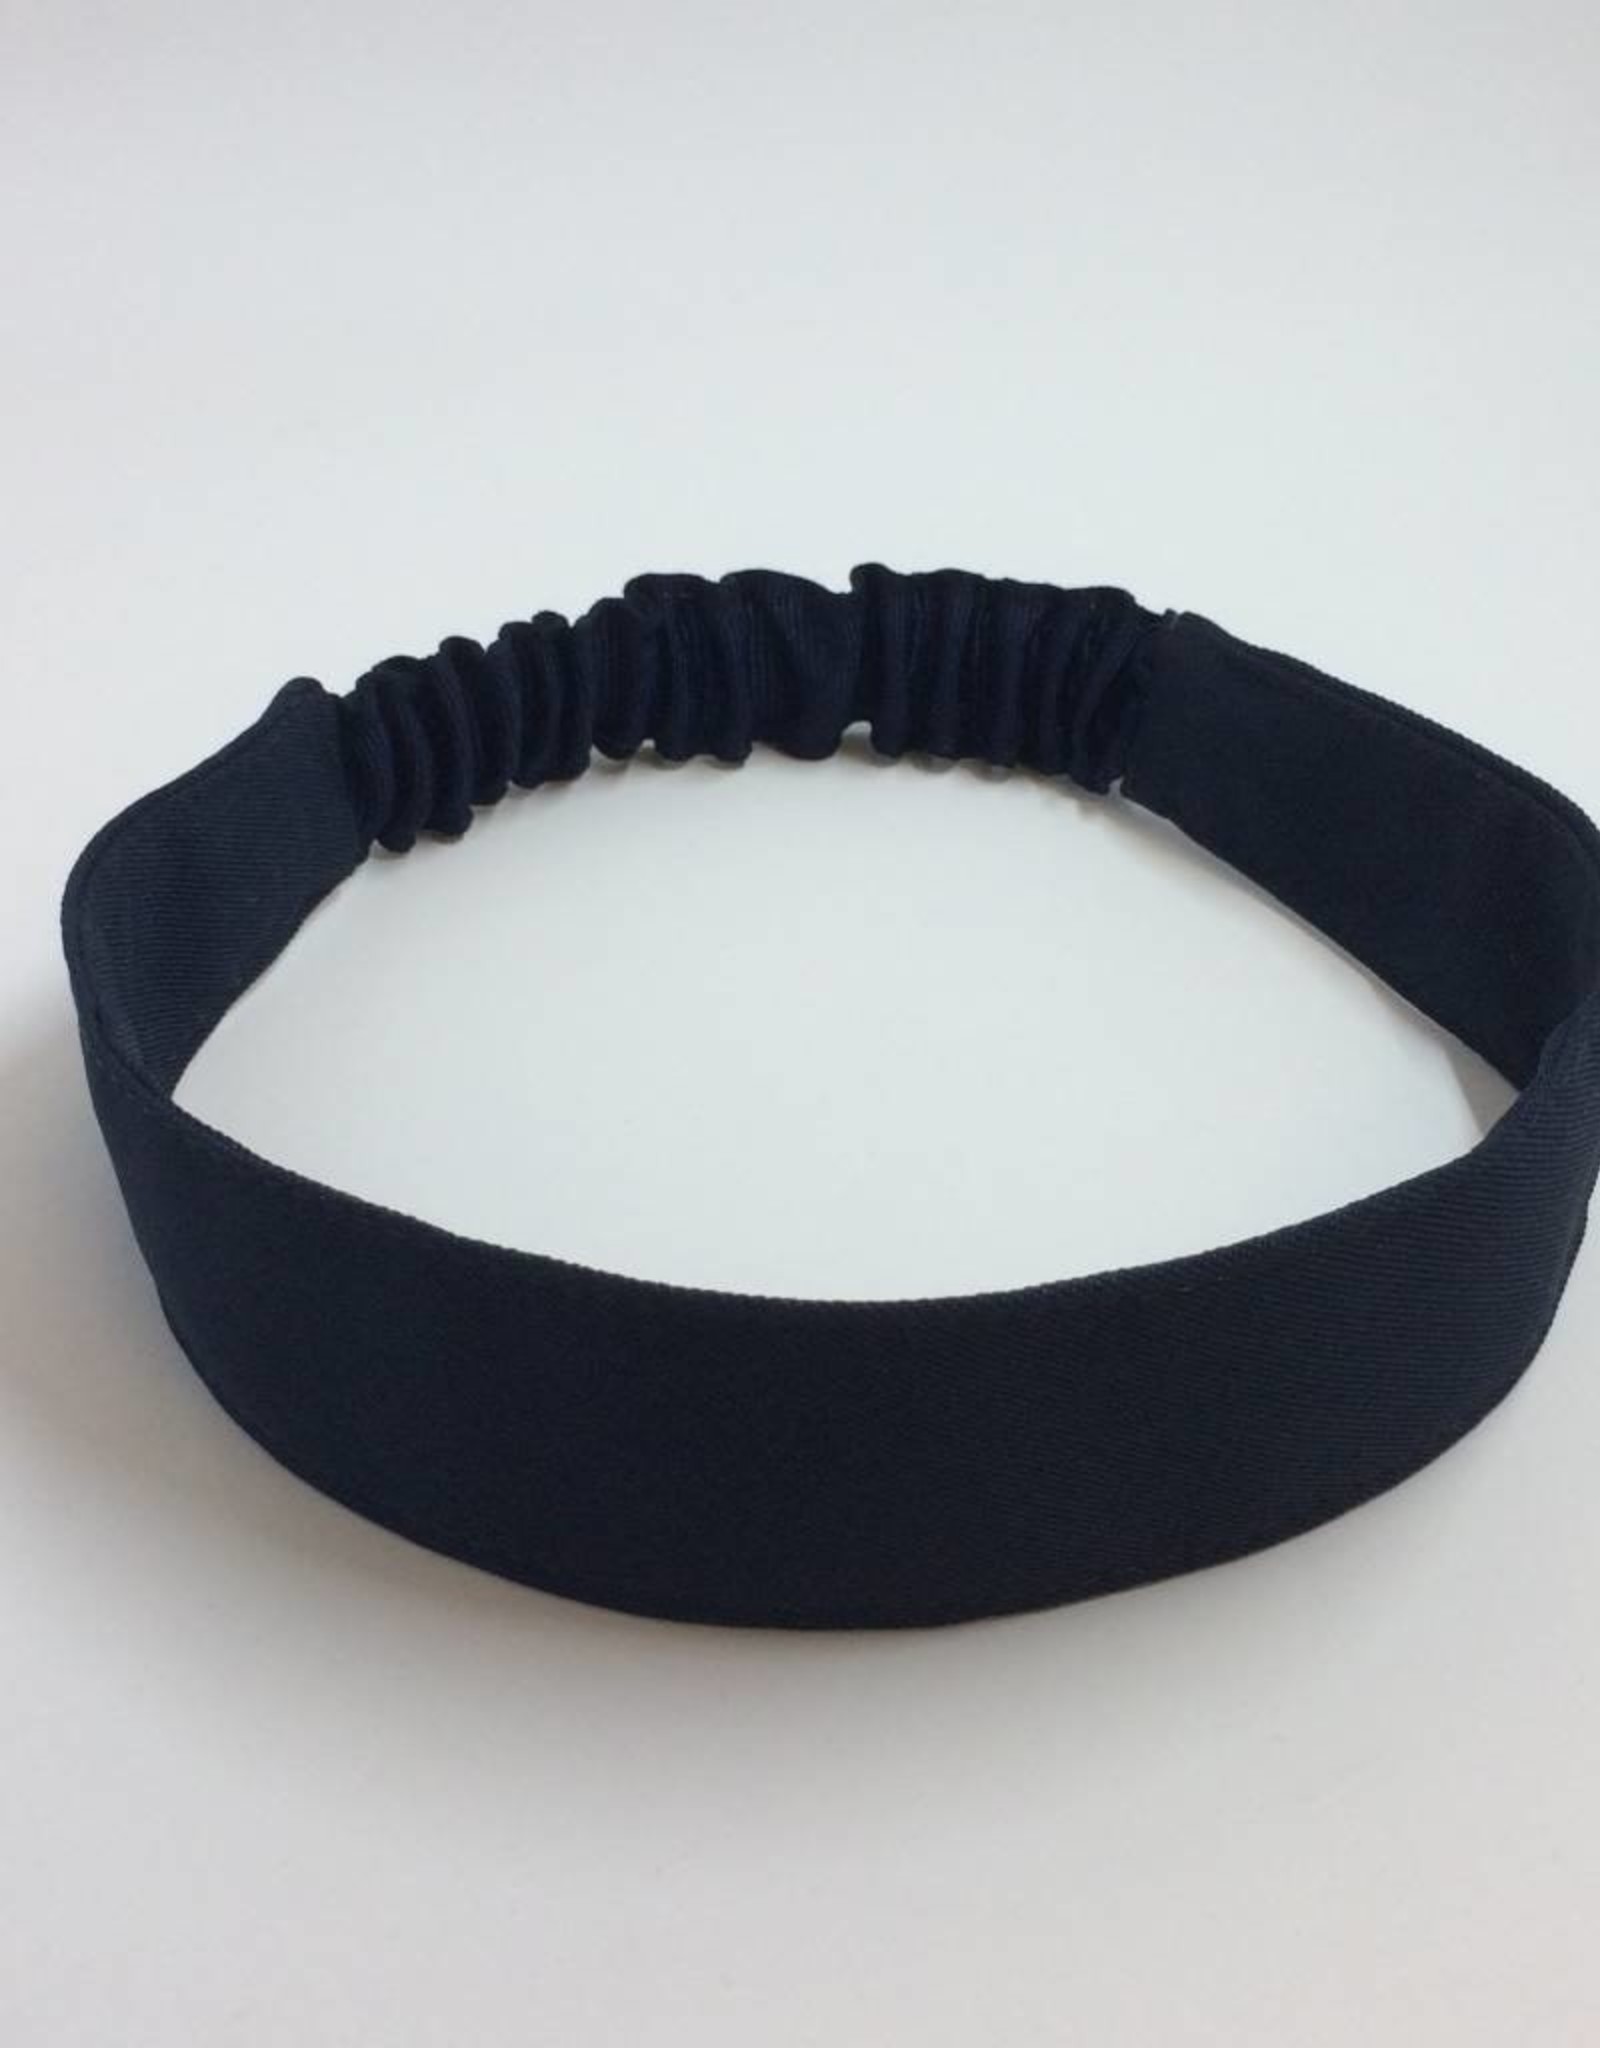 UNIFORM Navy Soft Headband, elastic back approx. 1 1/2" wide